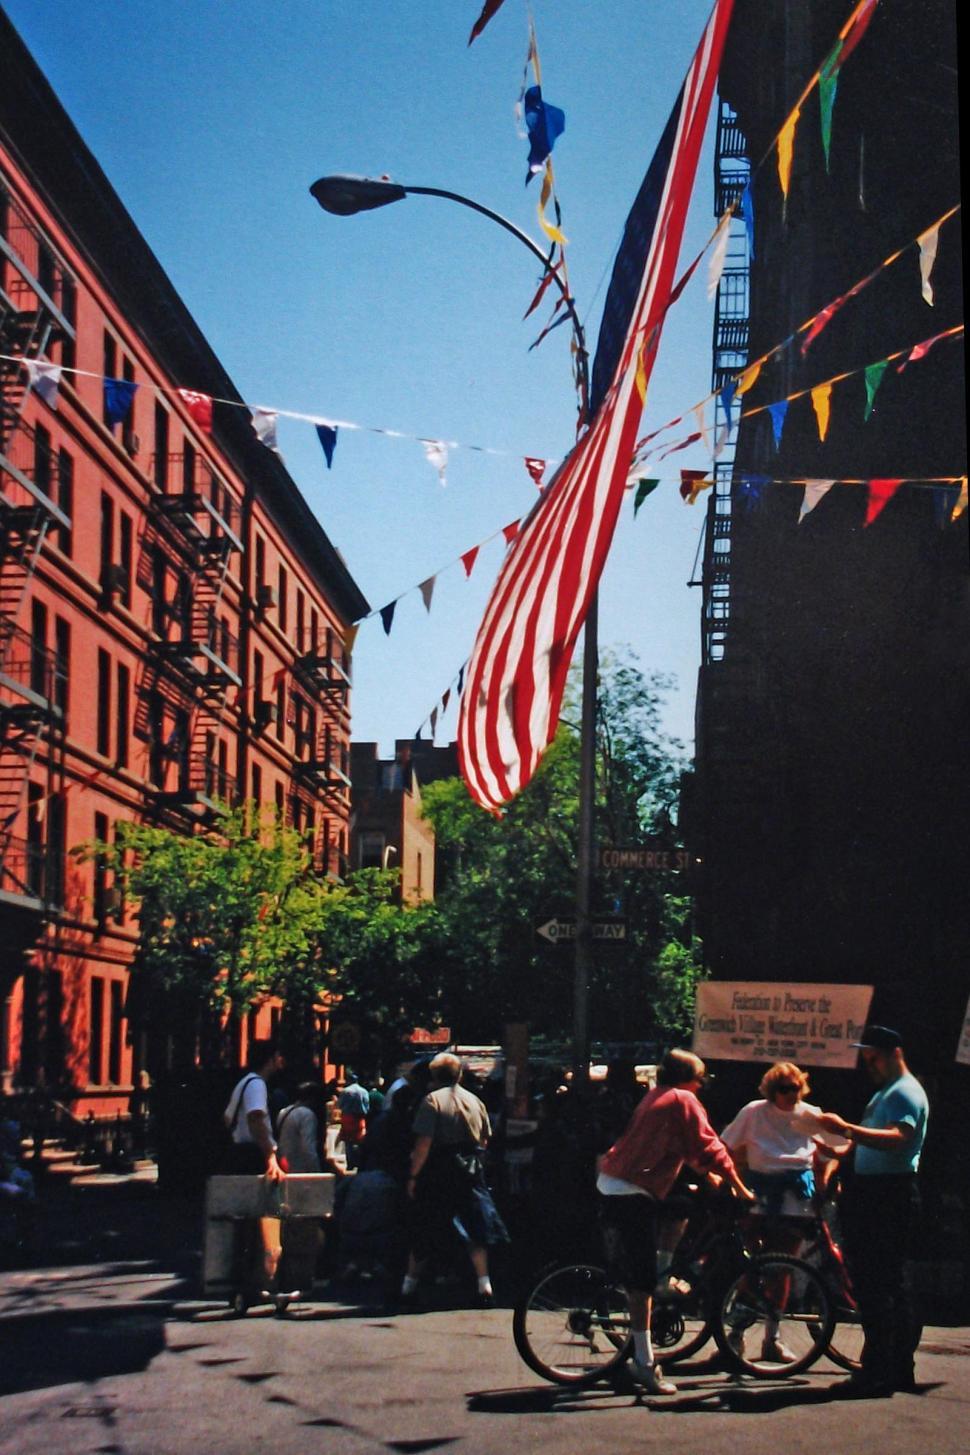 Download Free Stock Photo of Greenwich Village street scene 